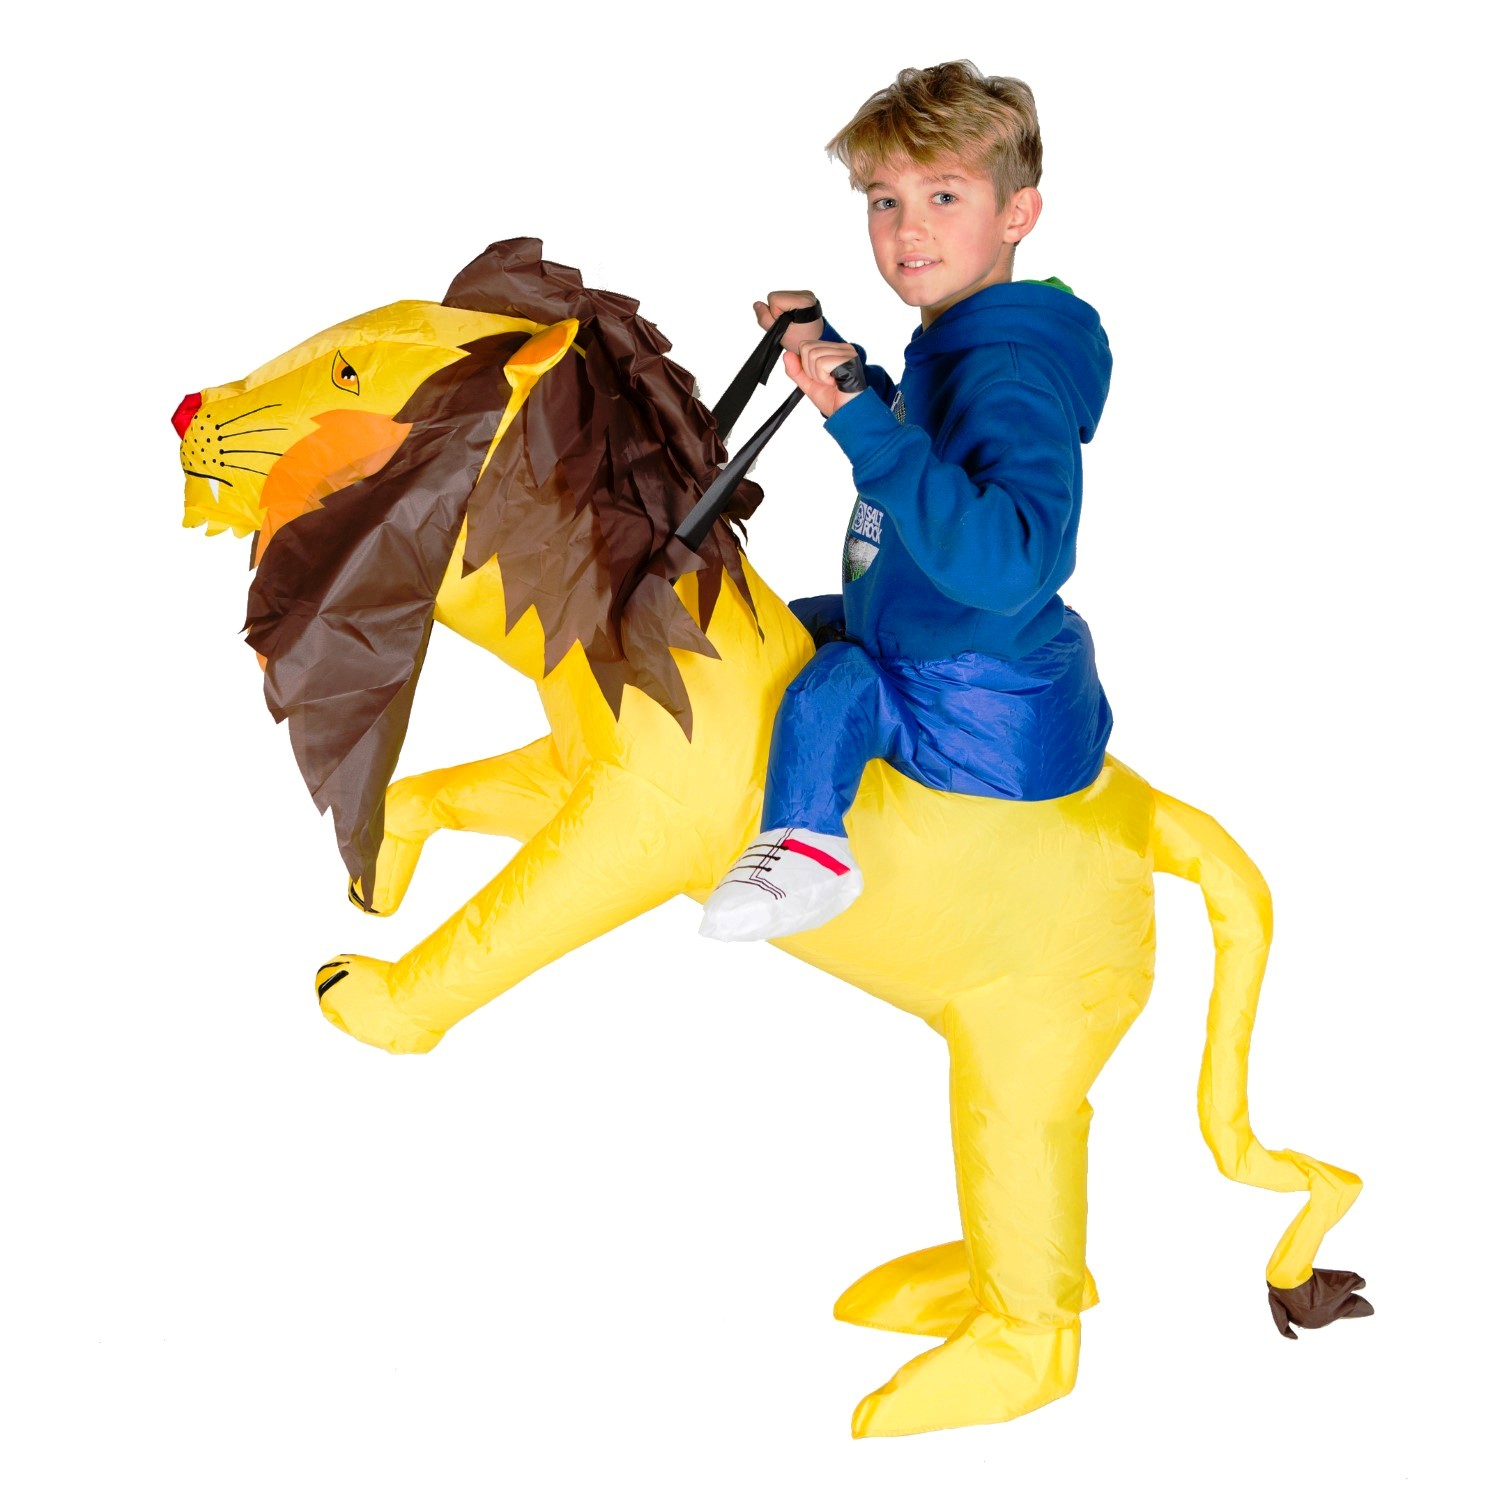 Bodysocks Inflatable Lion Costume for Kids